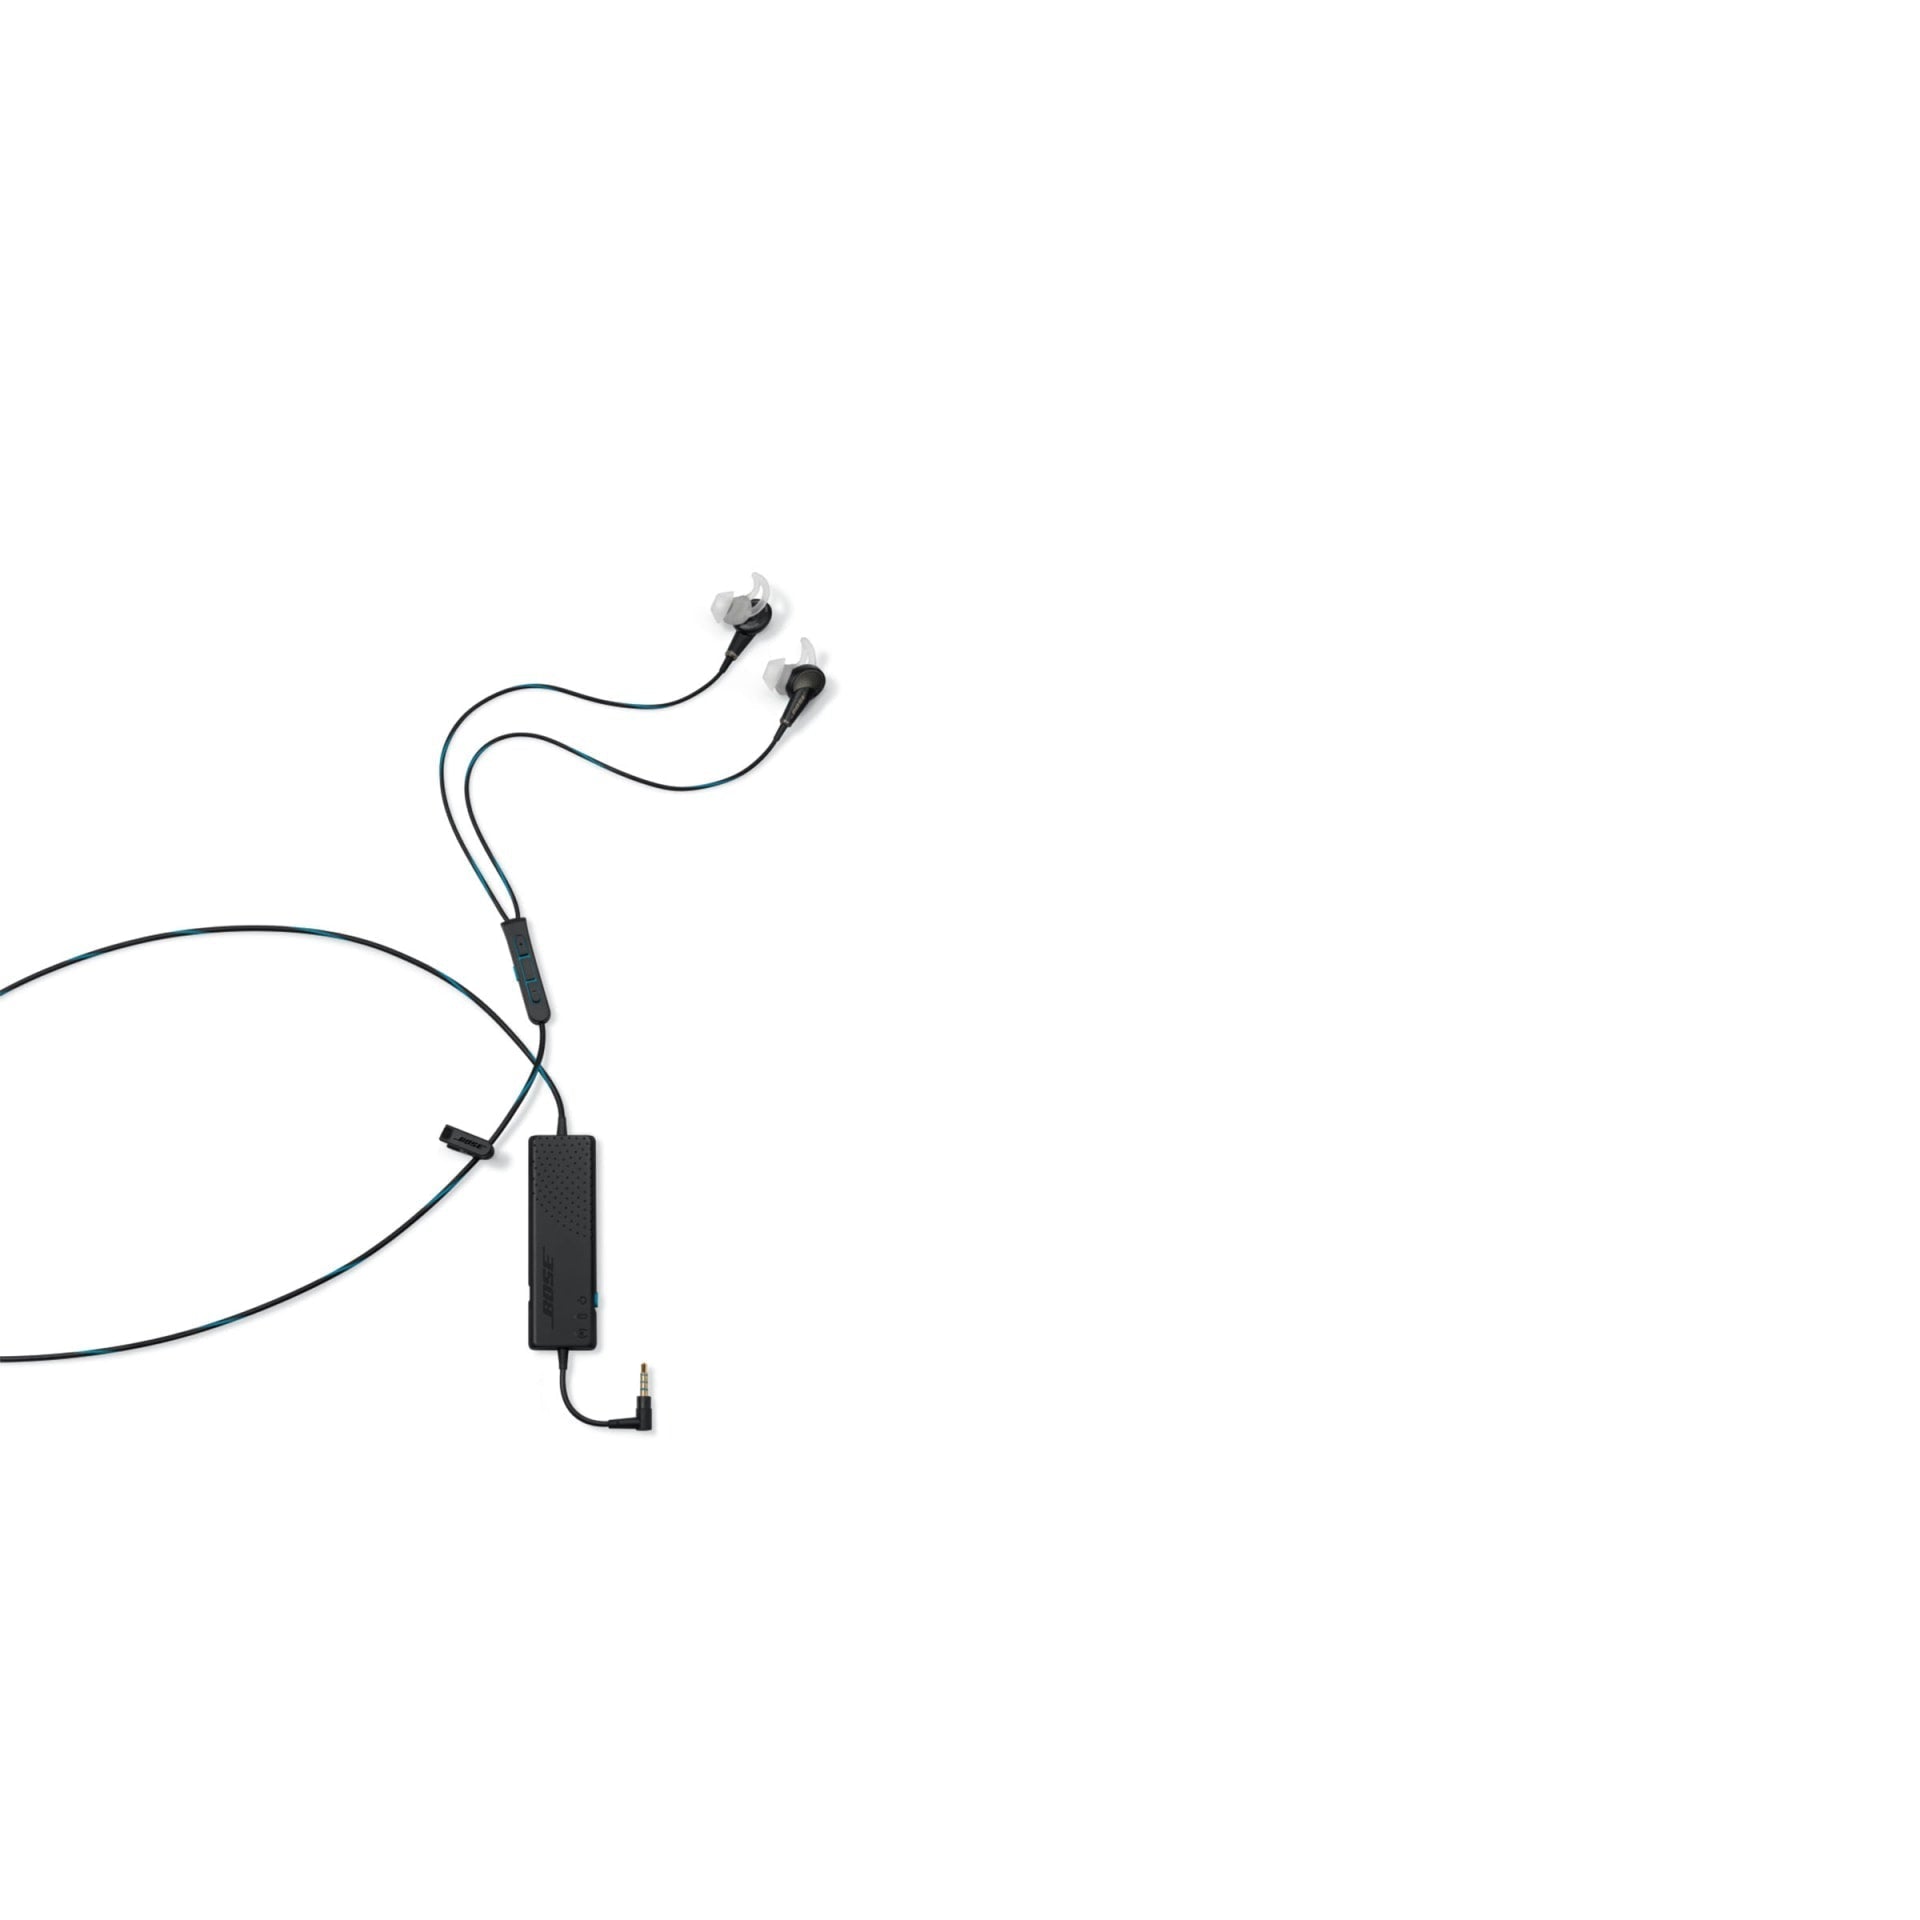 Bose QuietComfort 20 Acoustic Noise Cancelling Headphones (iOS) - Black